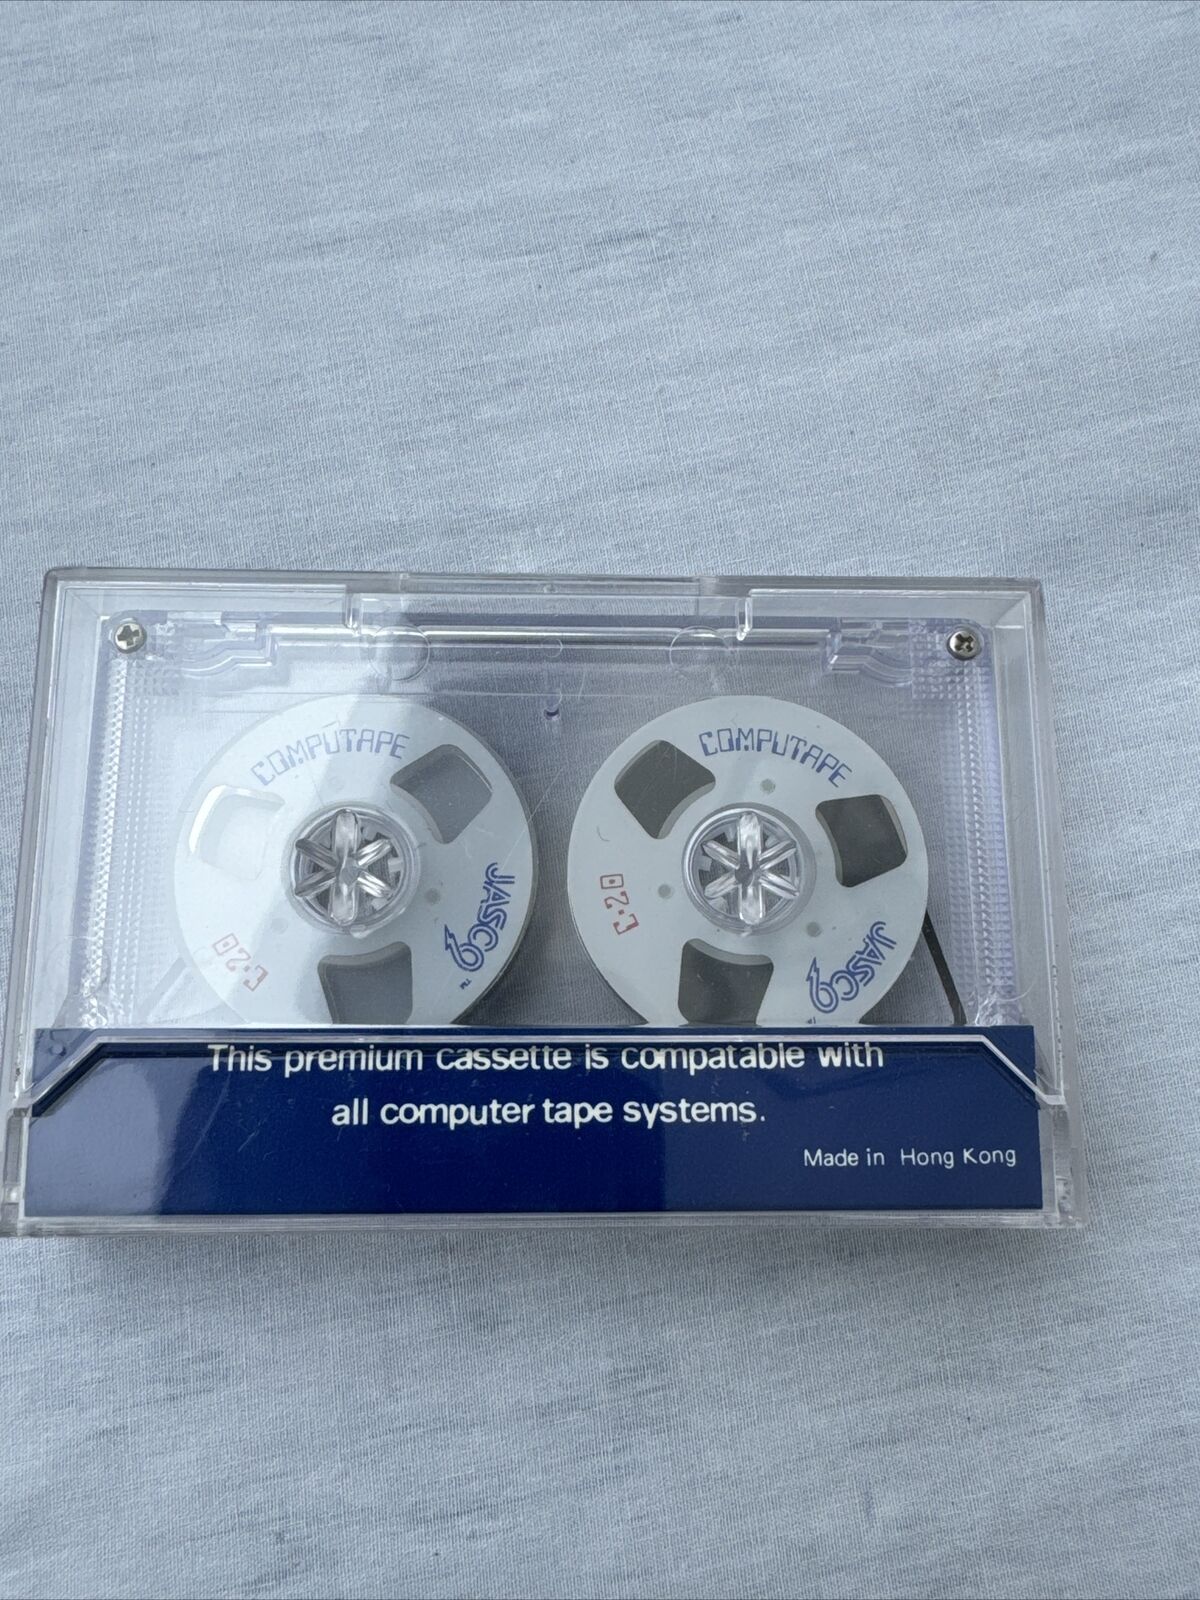 Vintage JASCO Computape Premium Cassette For Computer Tape Systems